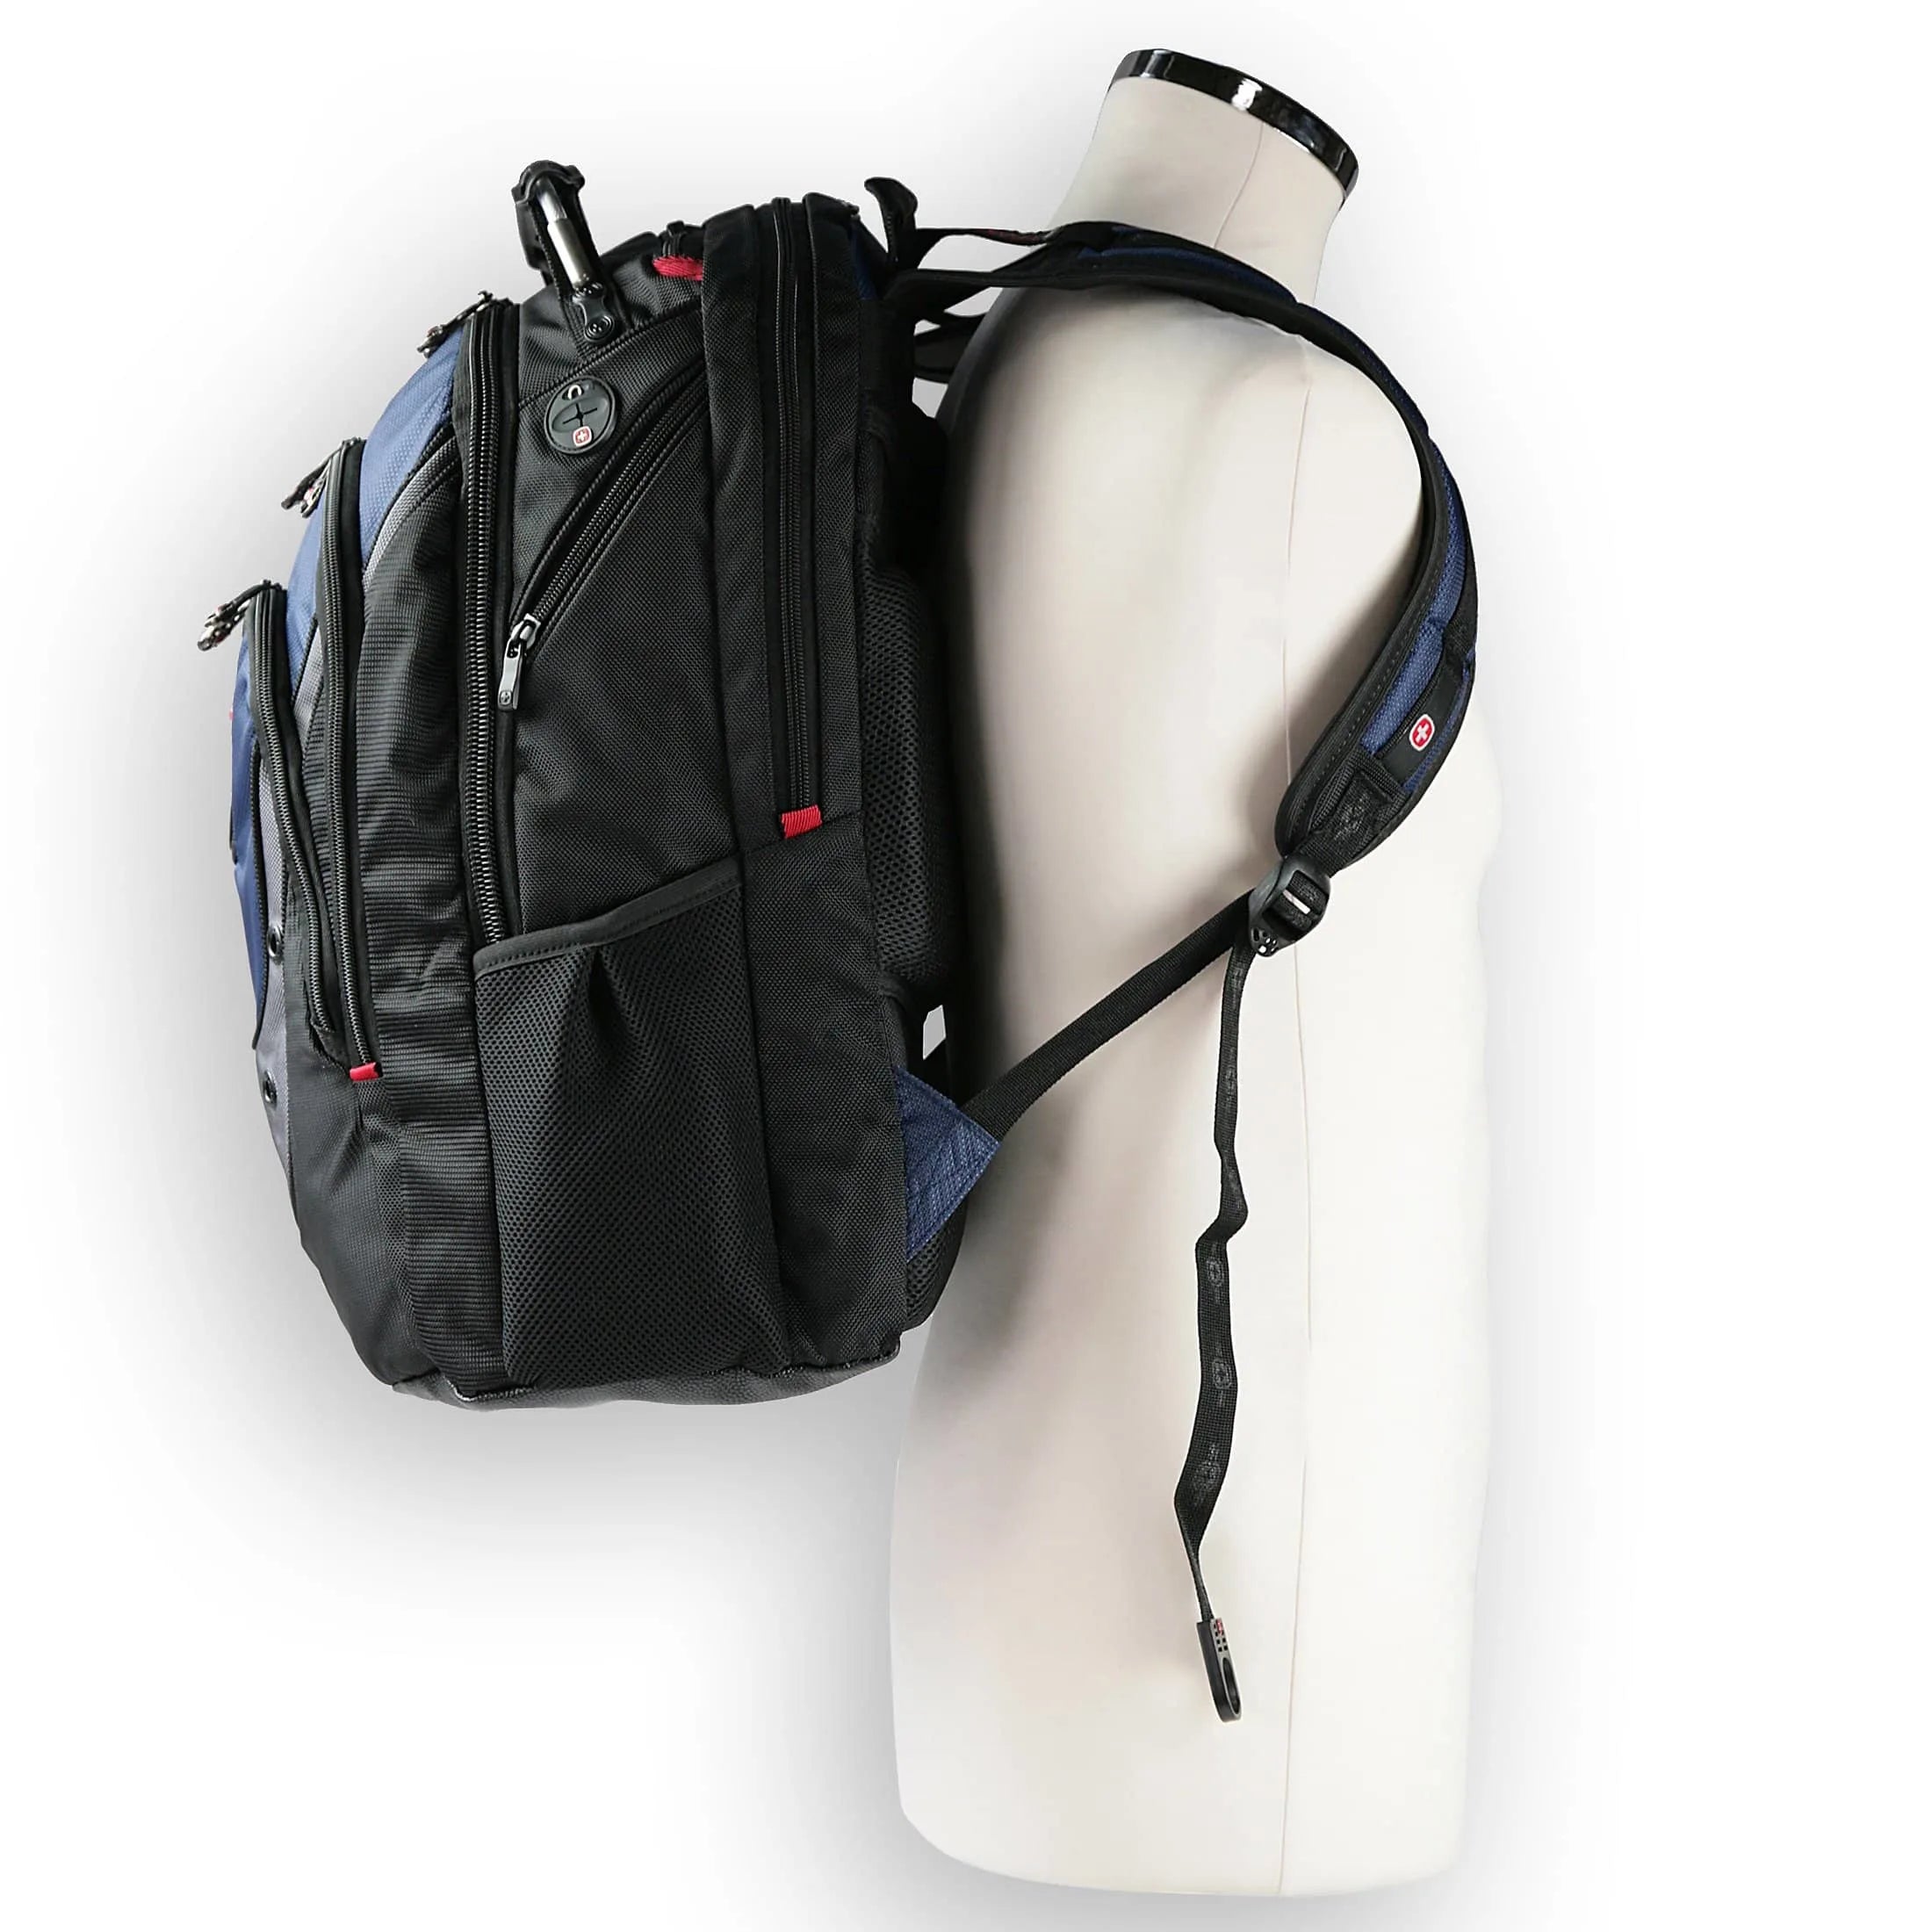 Wenger Business Ibex laptop backpack 47 cm - blue